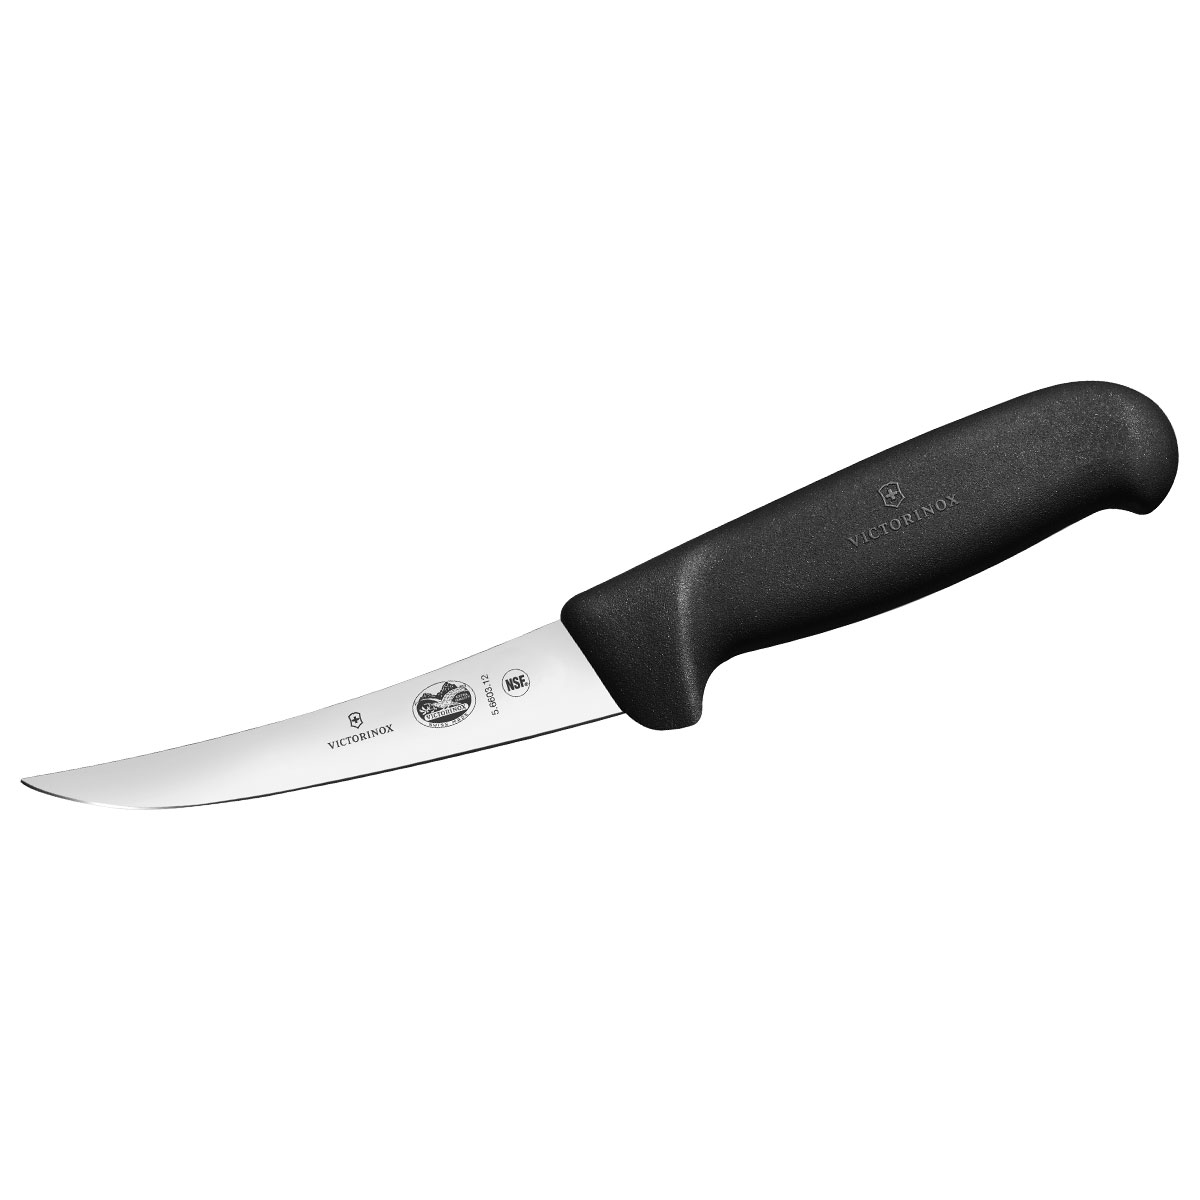 Victorinox Boning Knife, 12cm (5) - Curved, Narrow Blade - Black